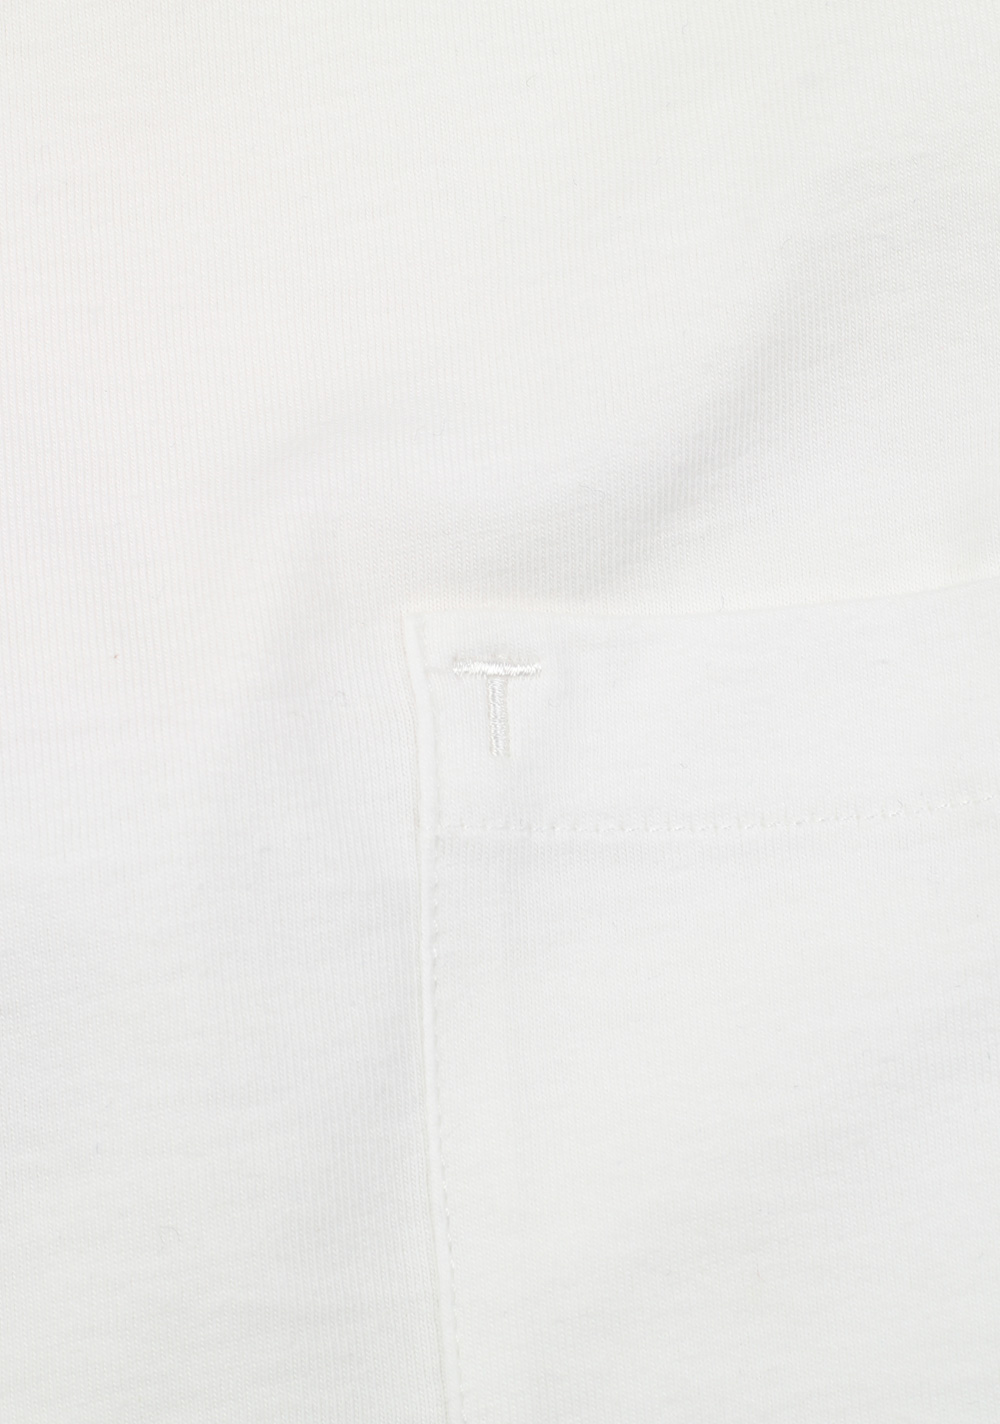 TOM FORD Crew Neck White Tee Shirt Size 48 / 38R U.S. | Costume Limité